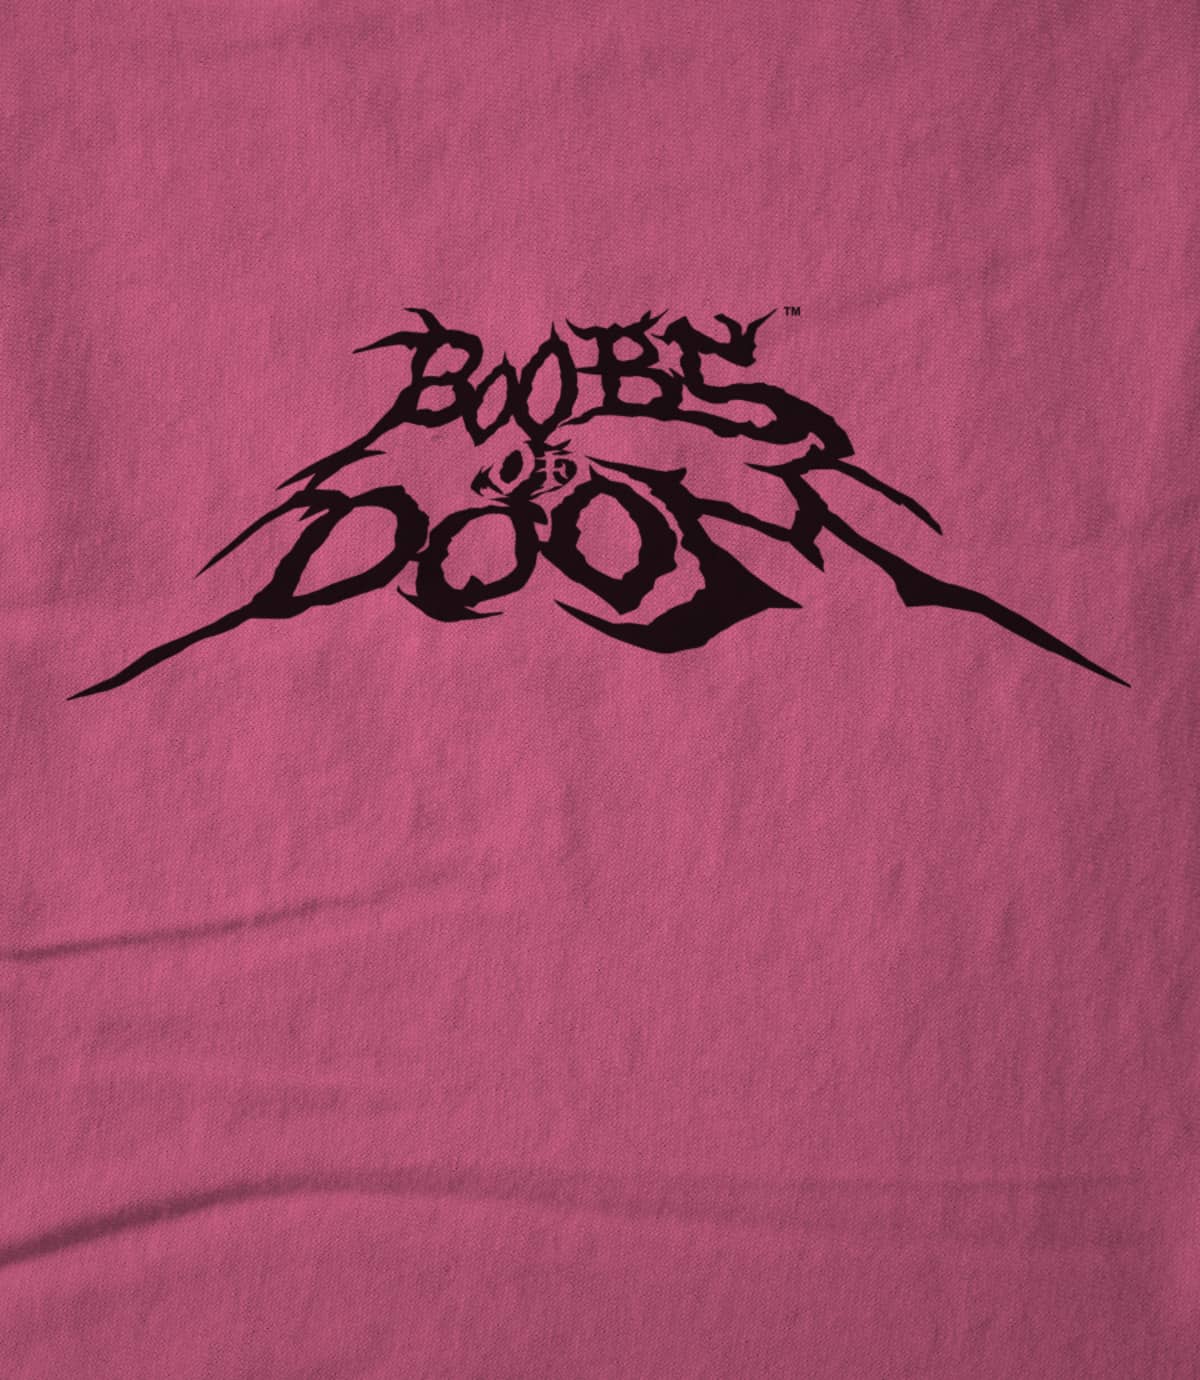 Boobs of doom logo2020 hypek pink 1591659528